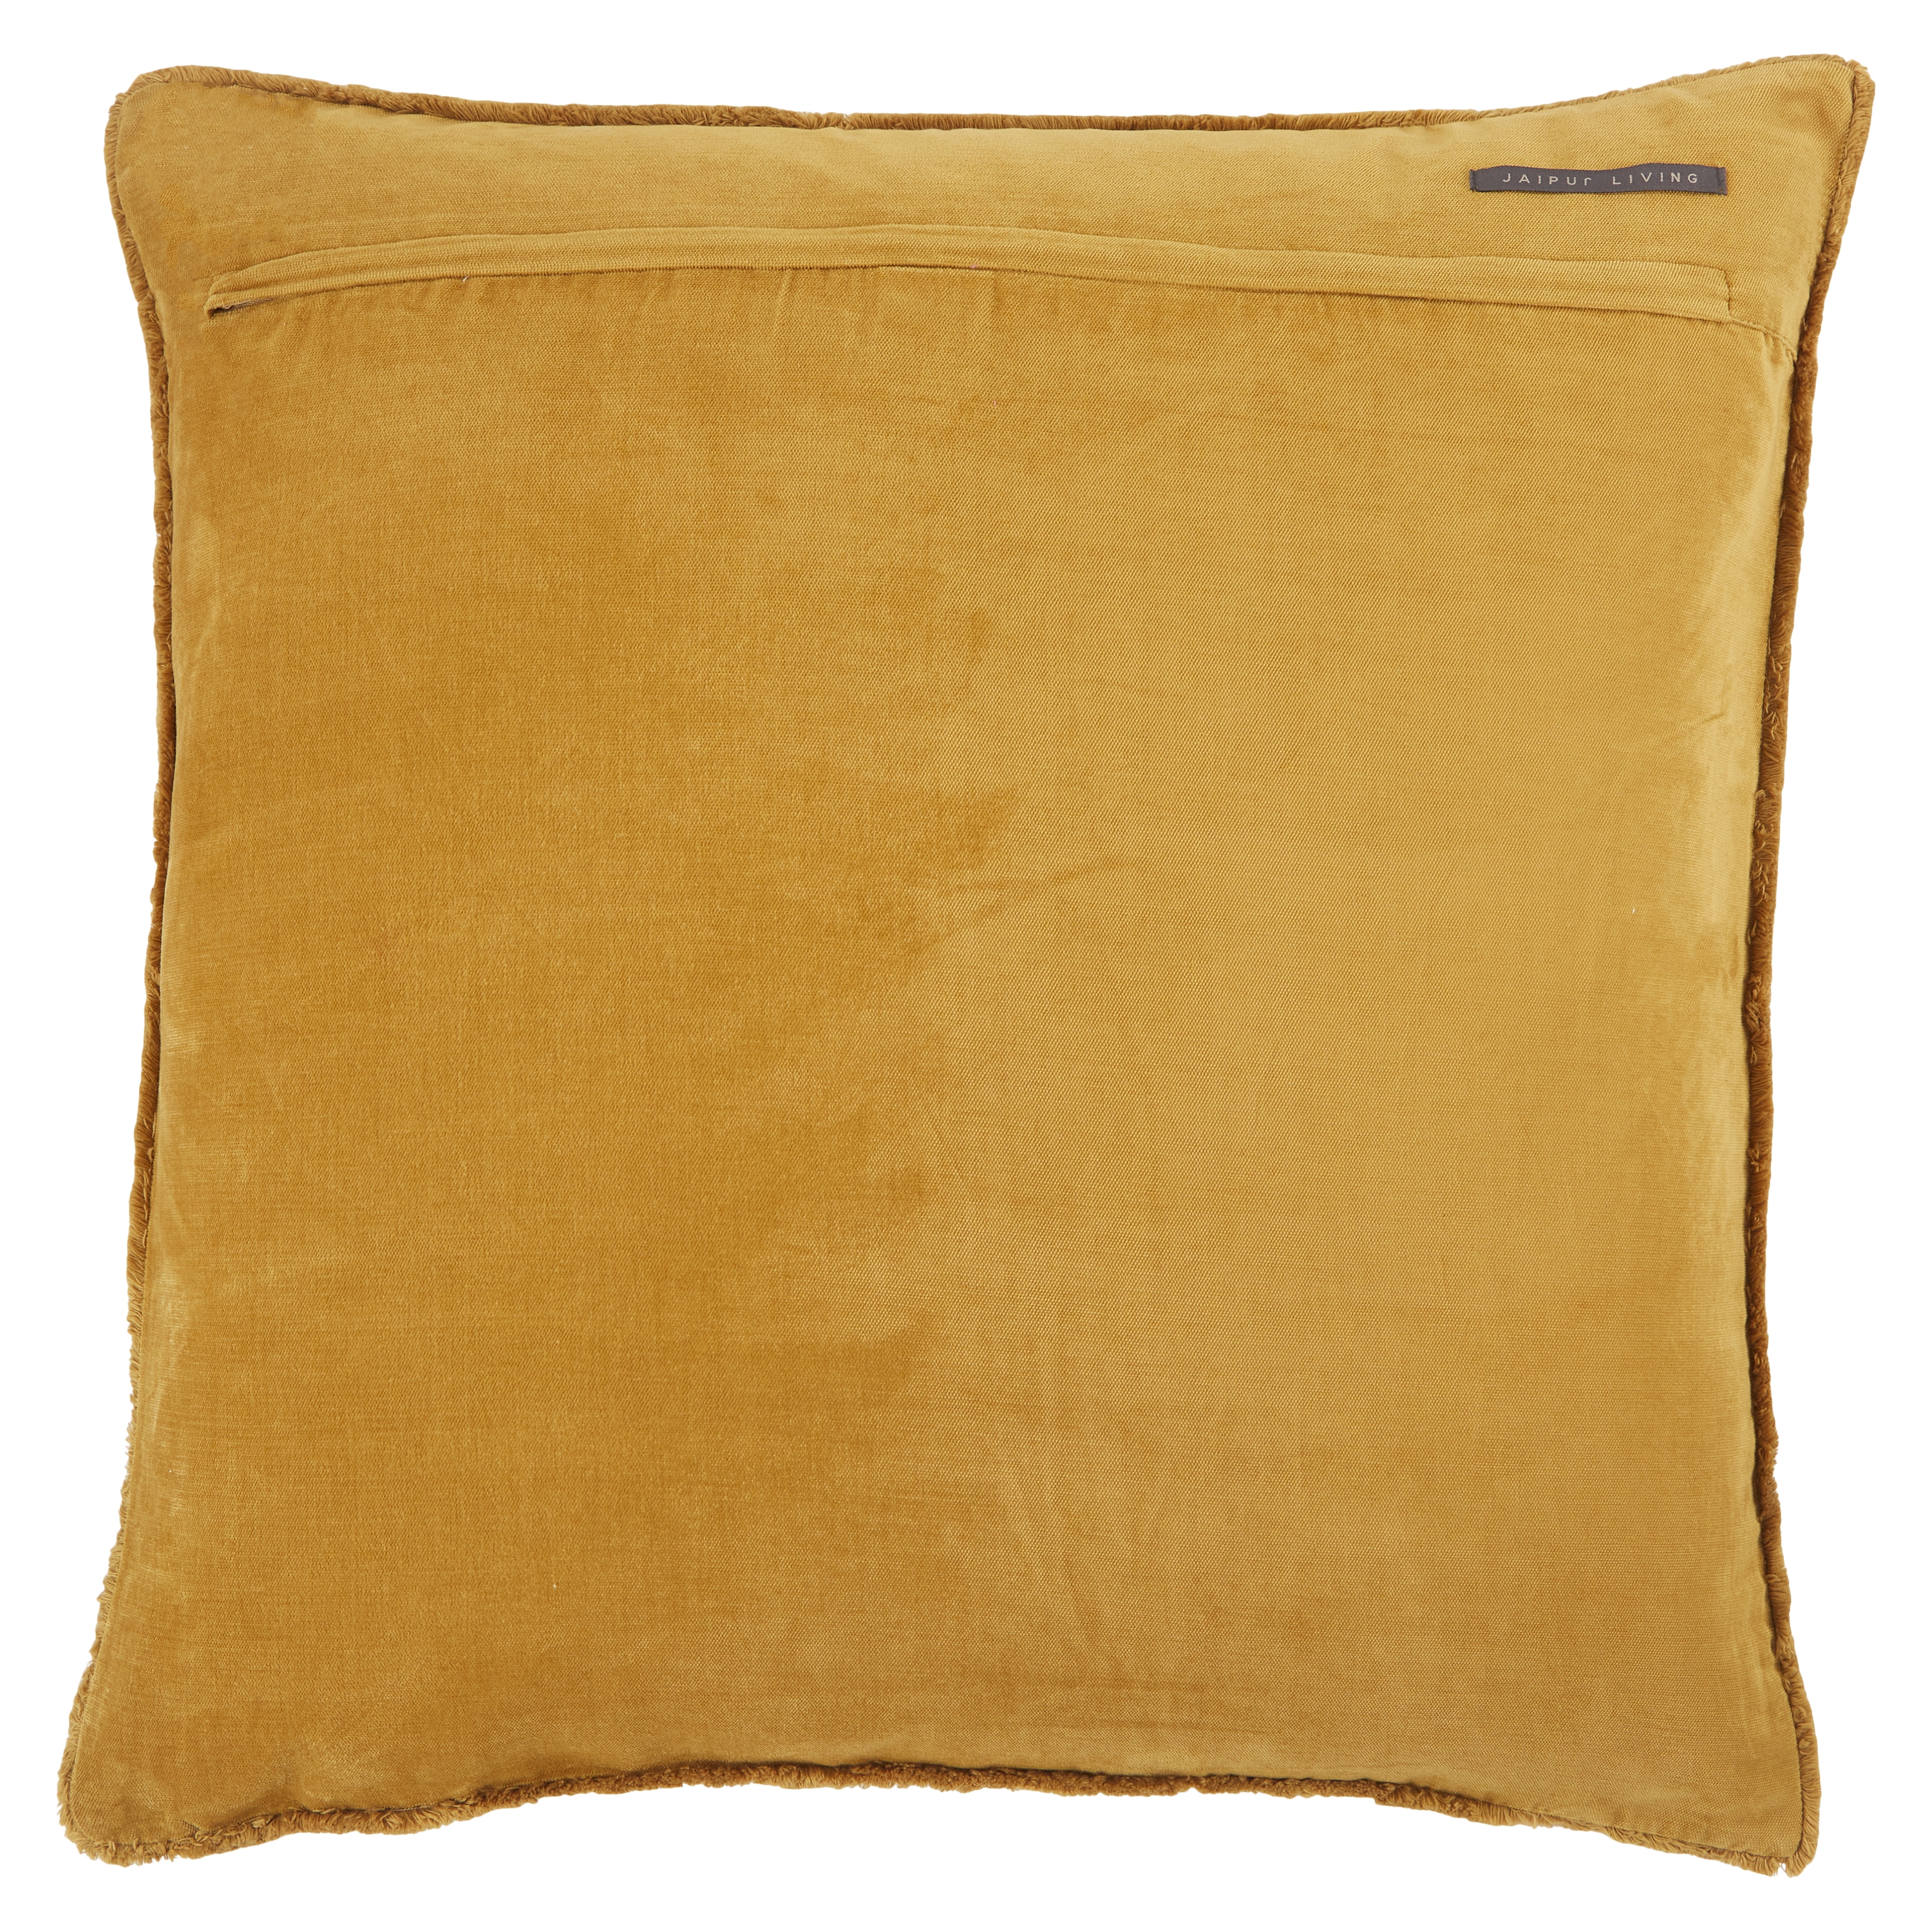 Design (US) Gold 26"X26" Pillow - Image 1